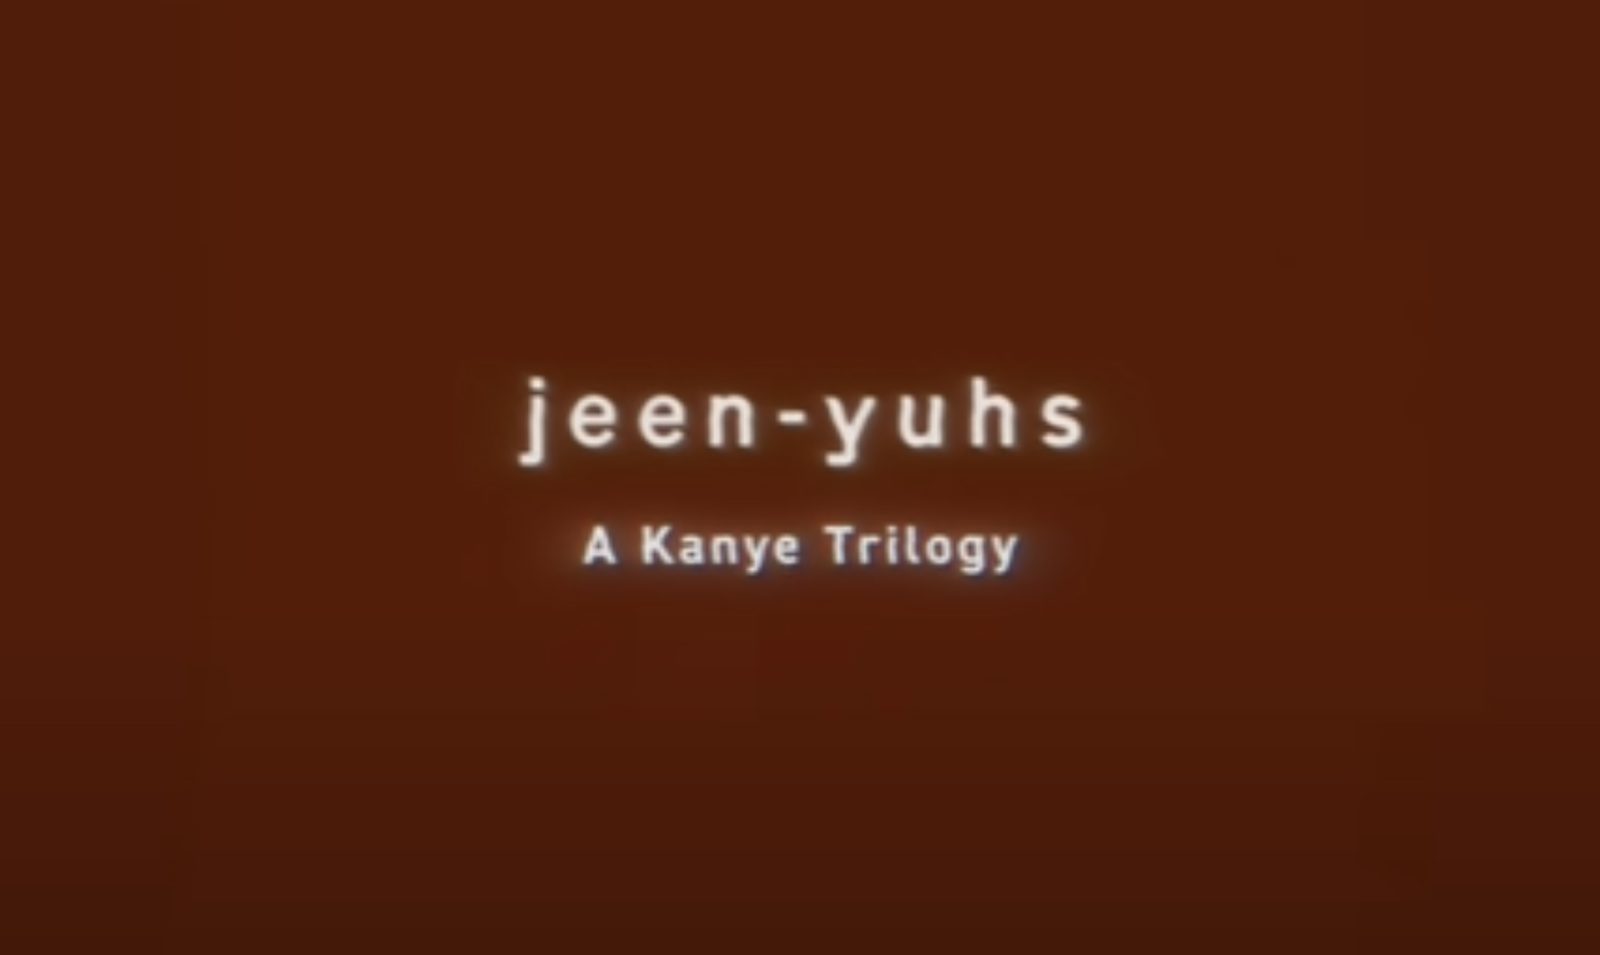 jeen-yuhs trailer